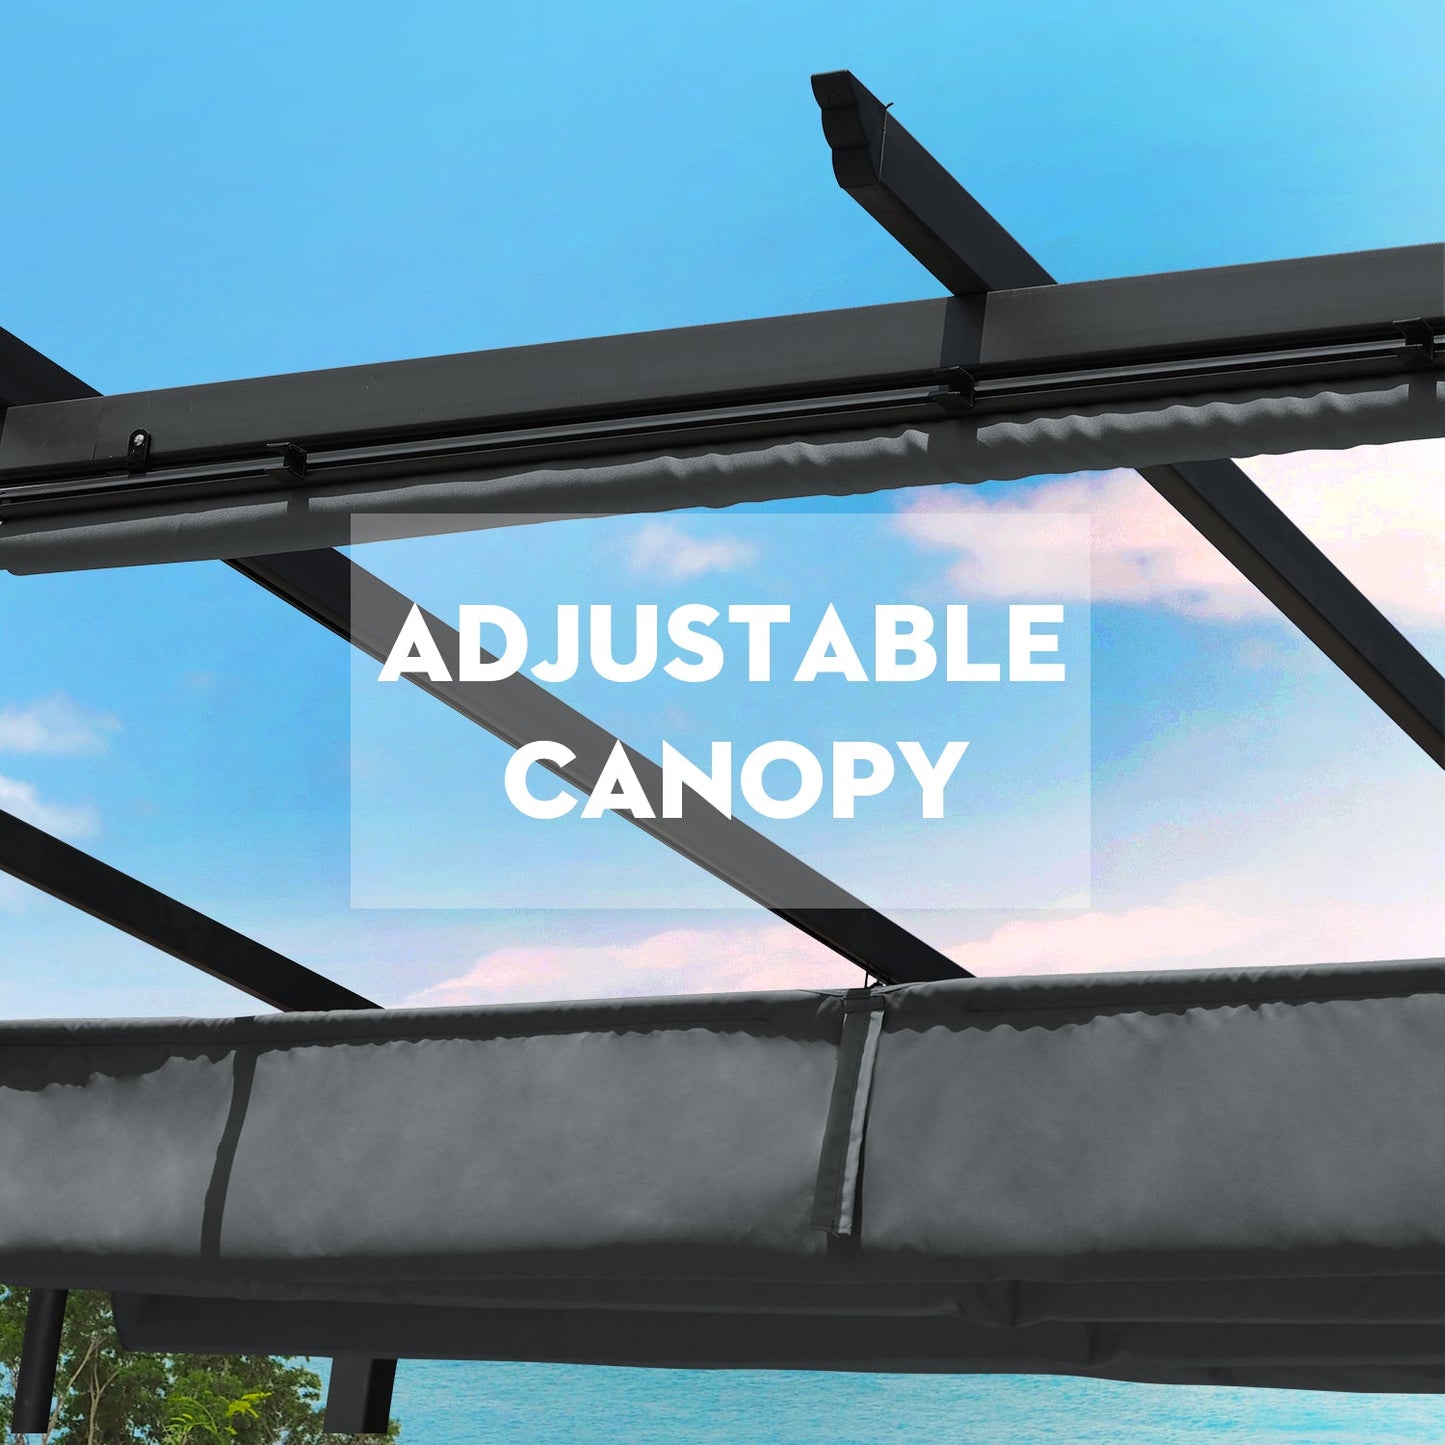 12 x 10 FT Outdoor Pergola with Retractable Shade Canopy, Aluminum Frame, Roller Shade Curtain- Dark Brown/Gary Pergola Aoodor   